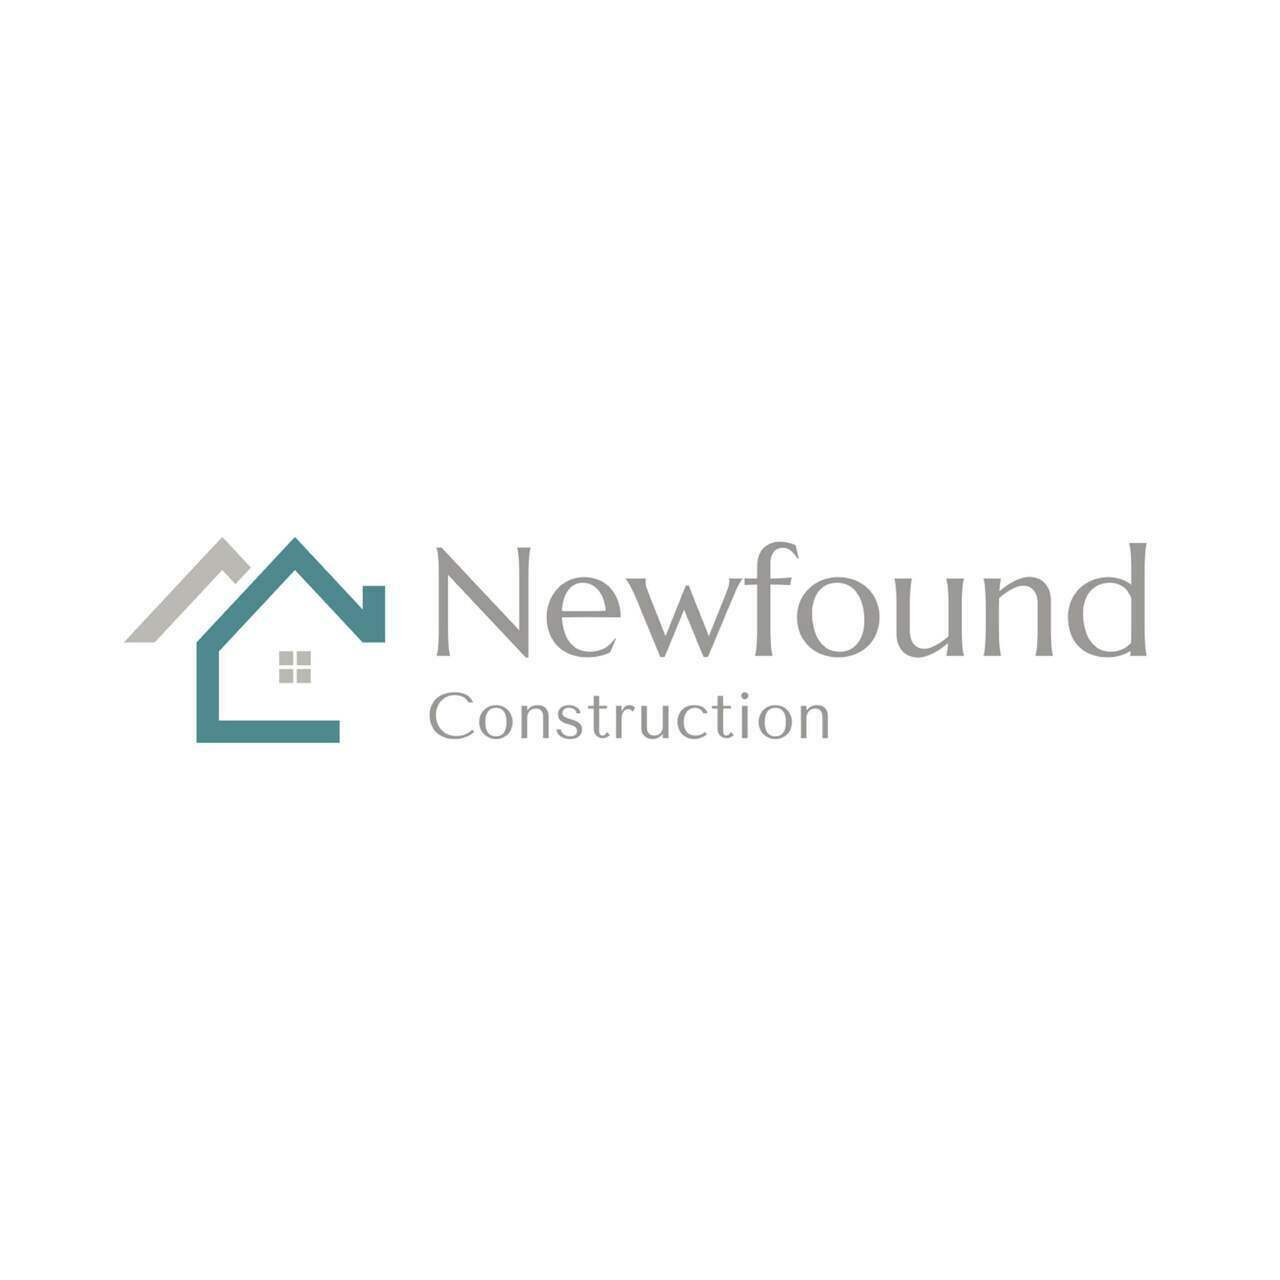 Newfound Construction's logo